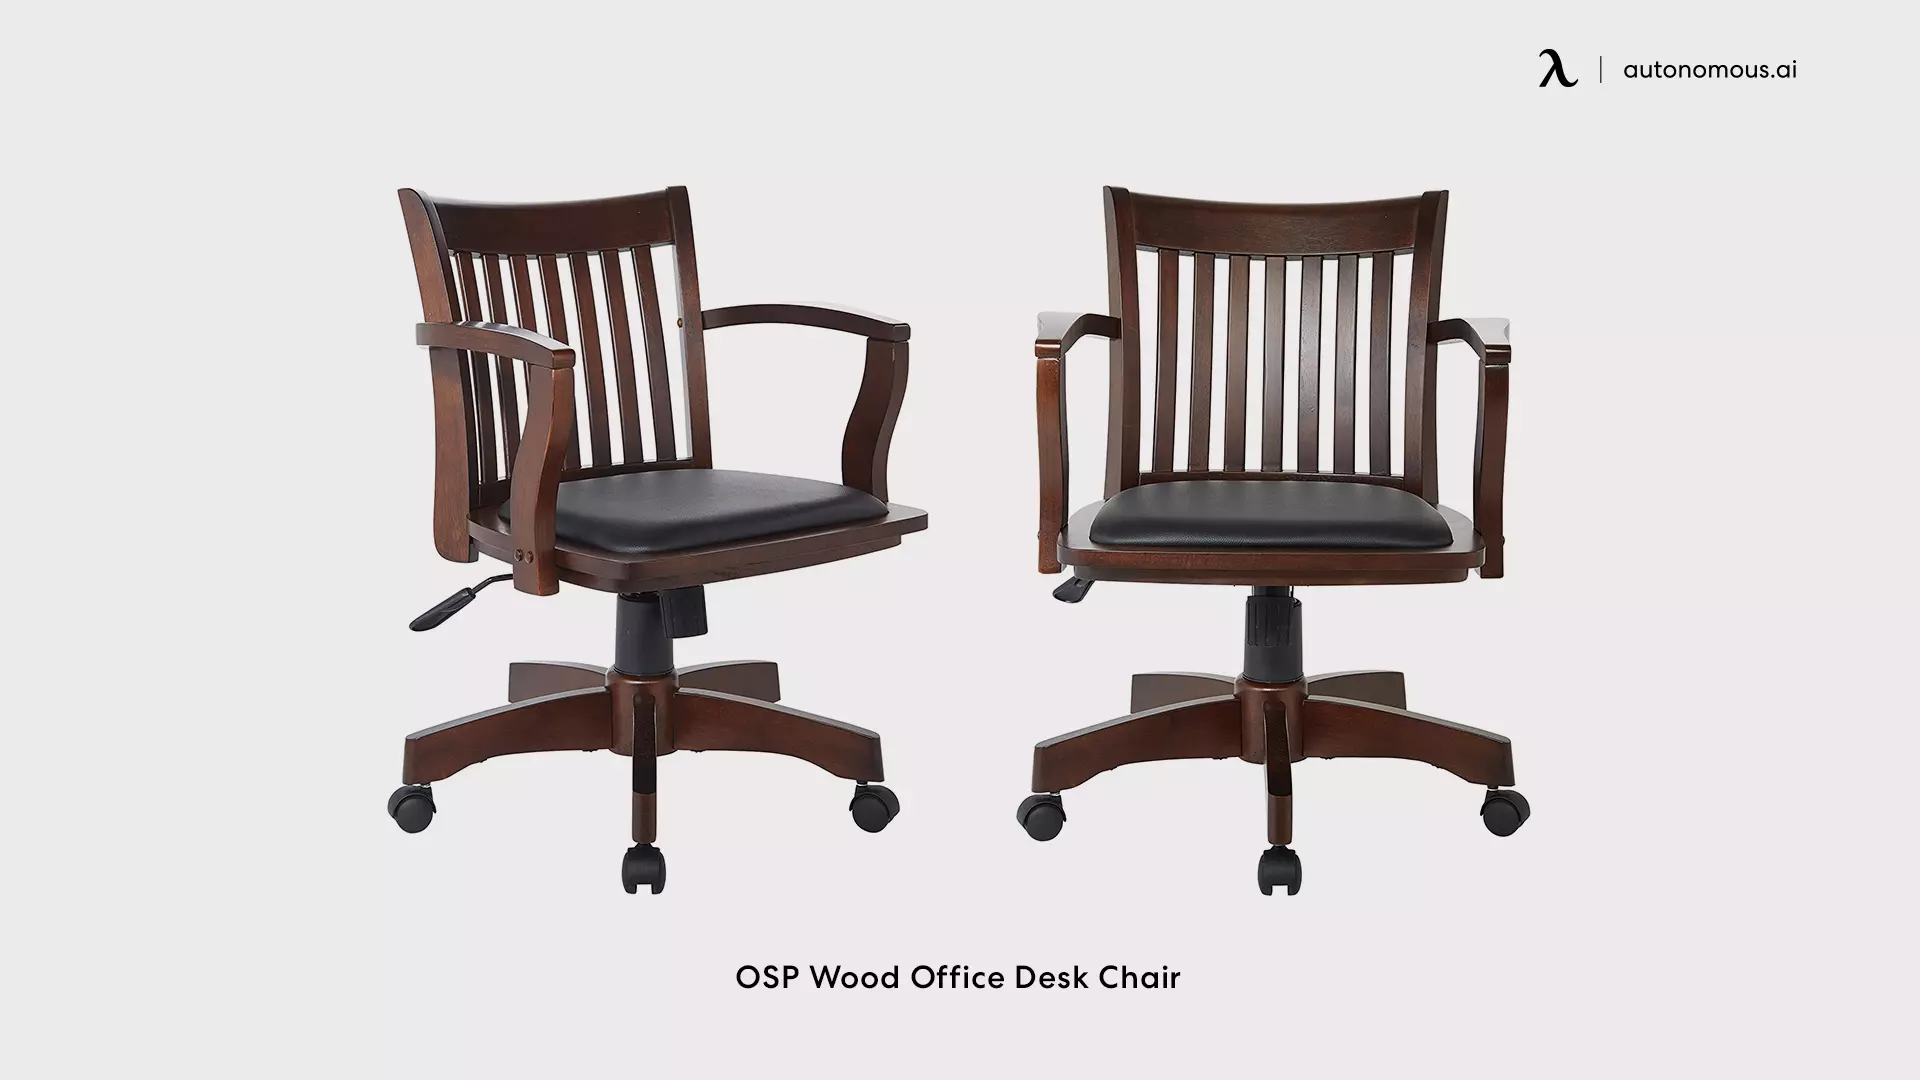 OSP Wood Office Desk Chair